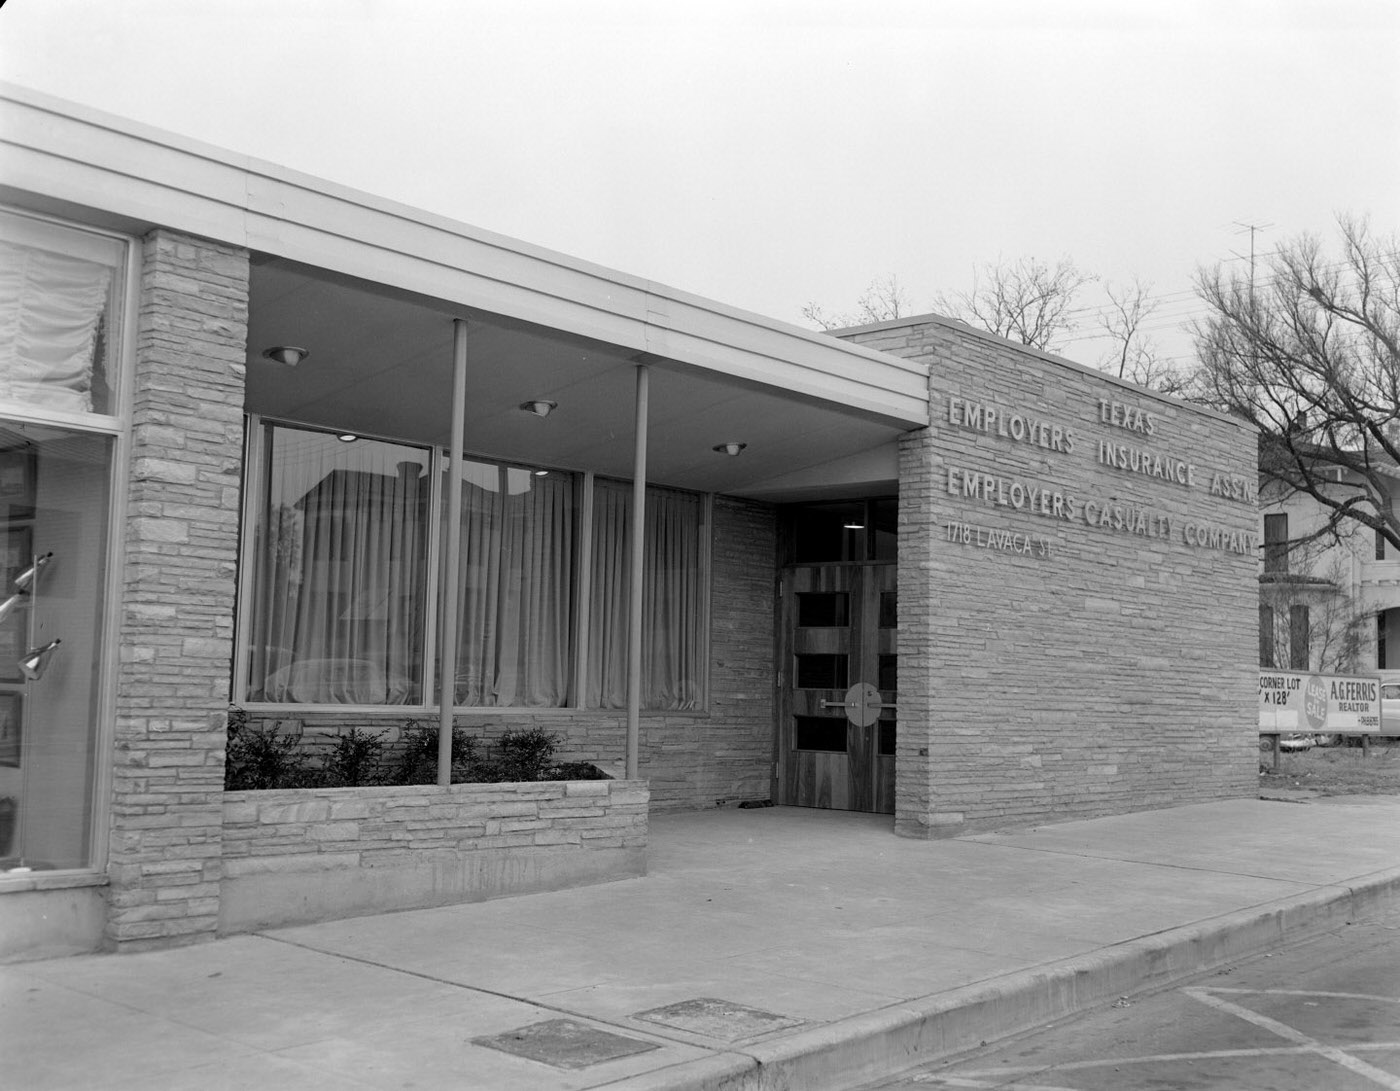 Texas Employees Insurance Association Building, 1955